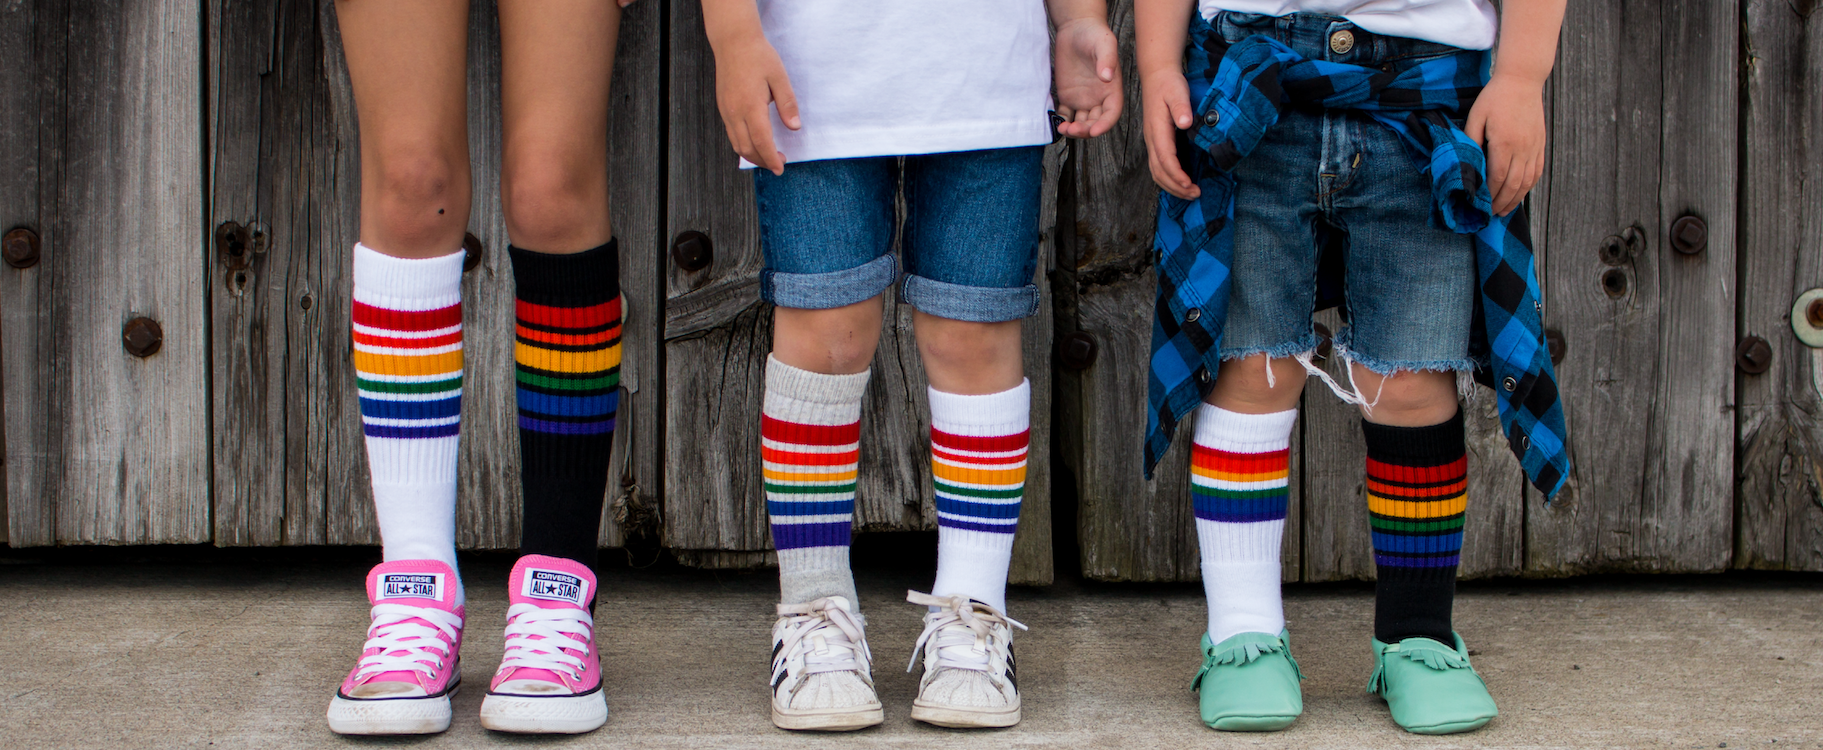 Black Rainbow Socks - Pride Socks by Dem Socks